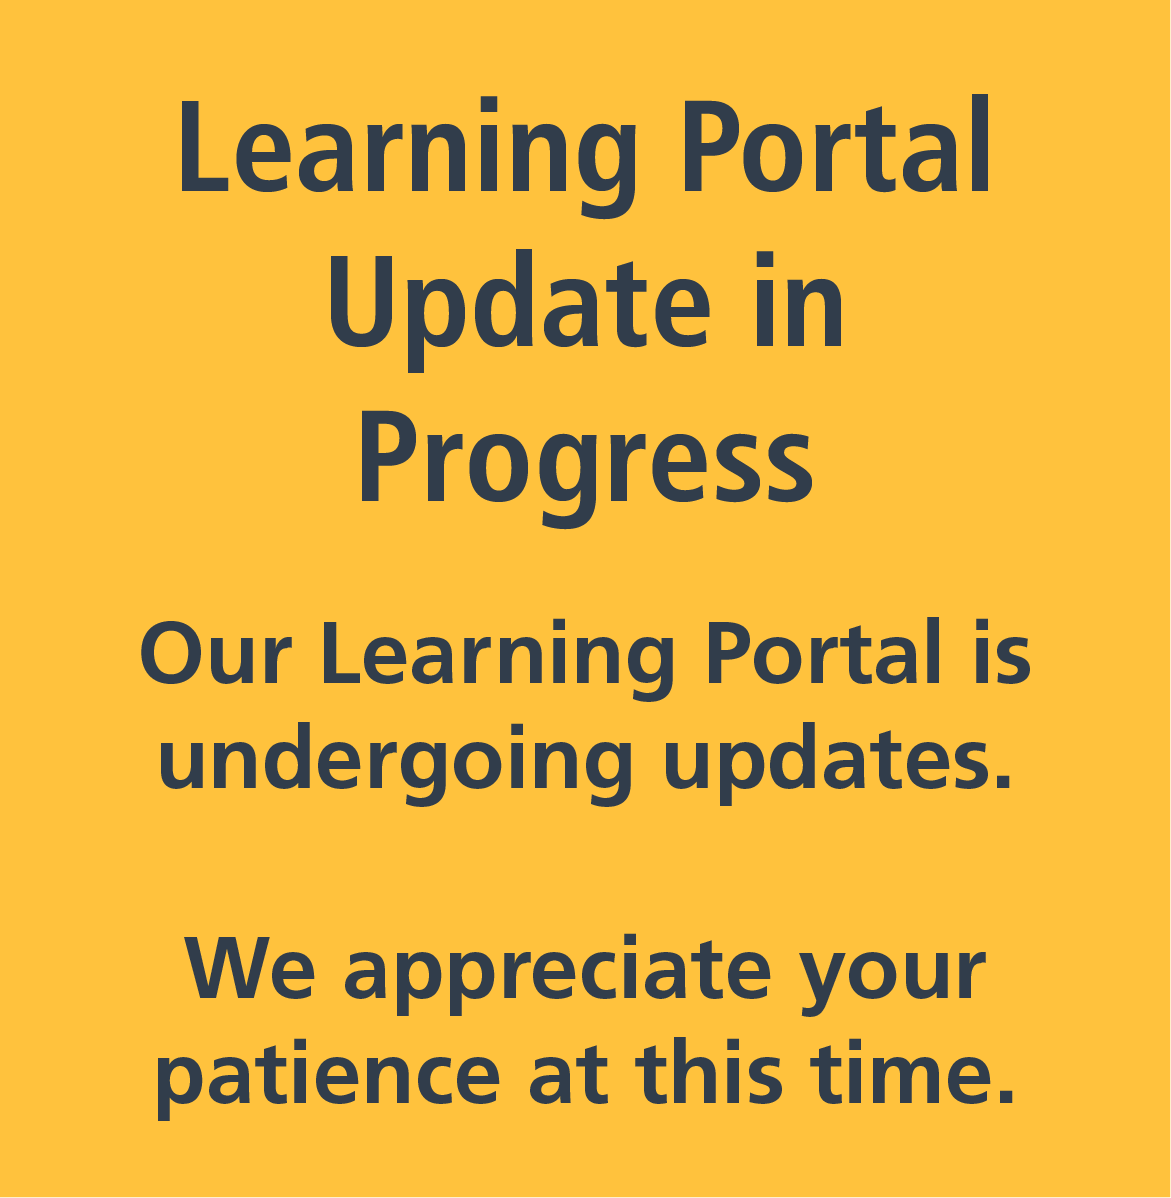 Learning Portal Update notification